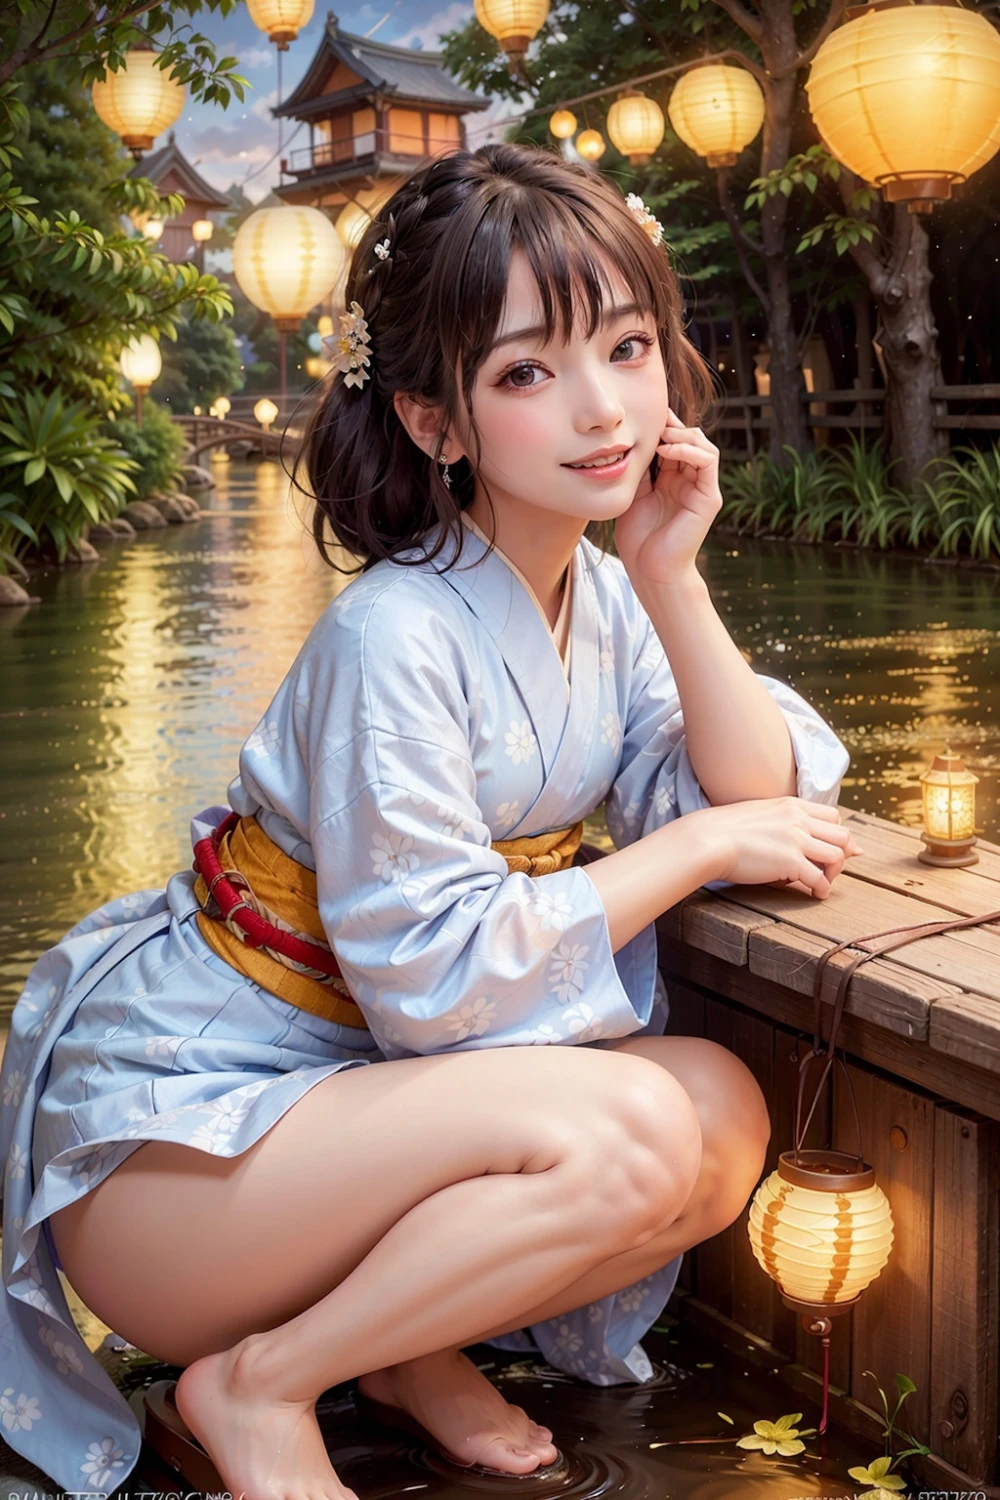 yukata-realistic-style-all-ages-35